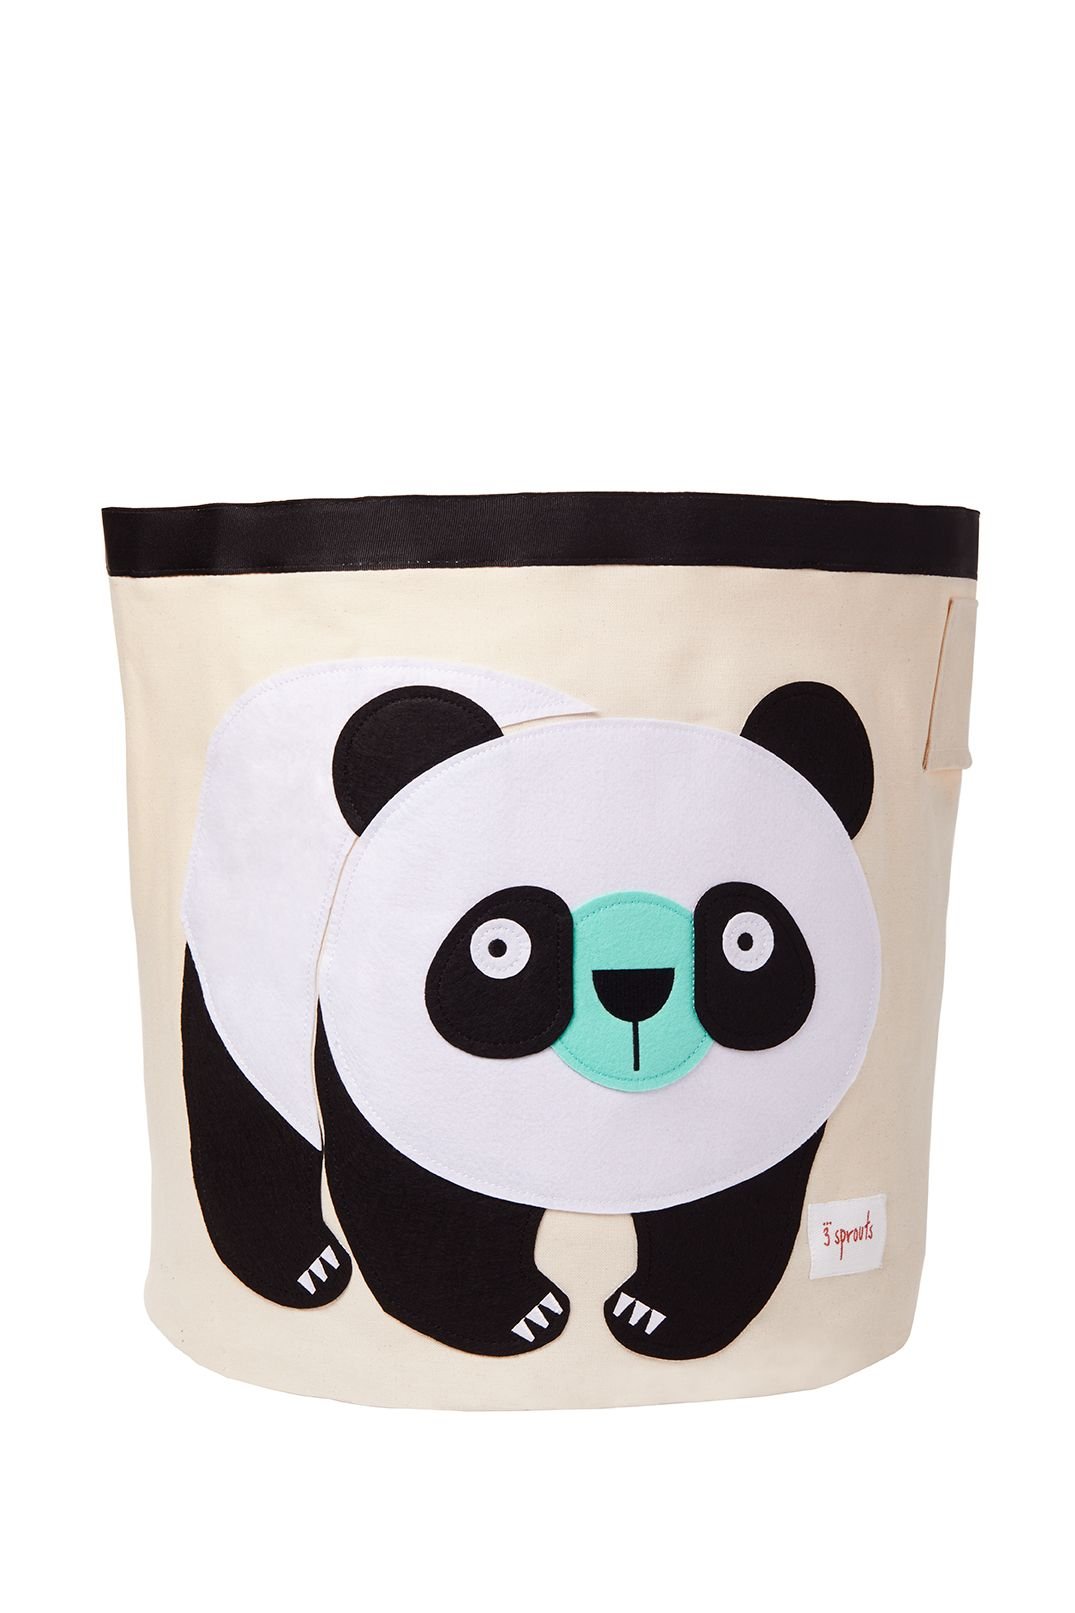 3 Sprouts - Storage Bin - Panda - Baby og barn